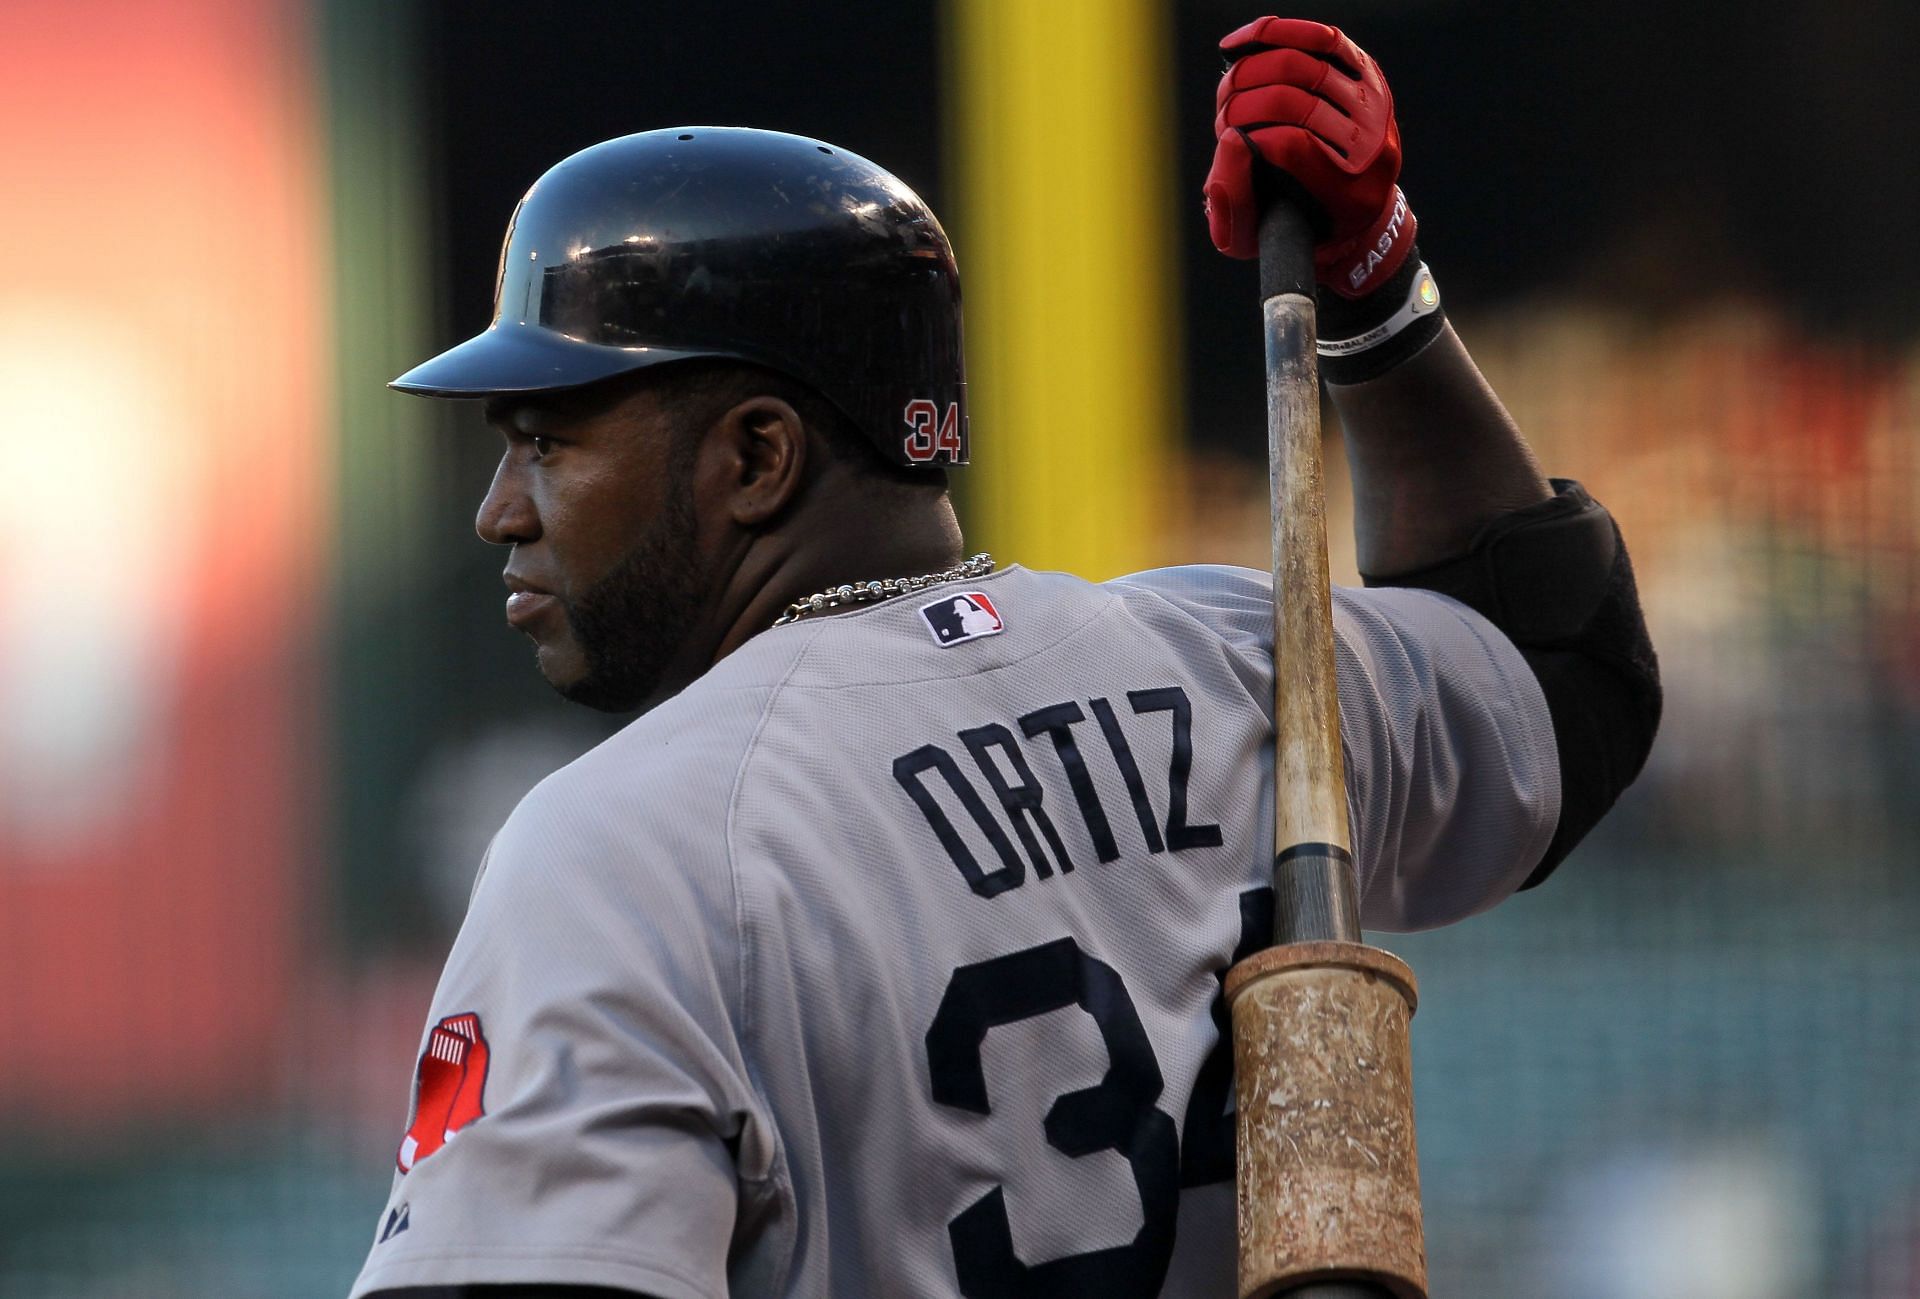 Boston Red Sox legend David Ortiz